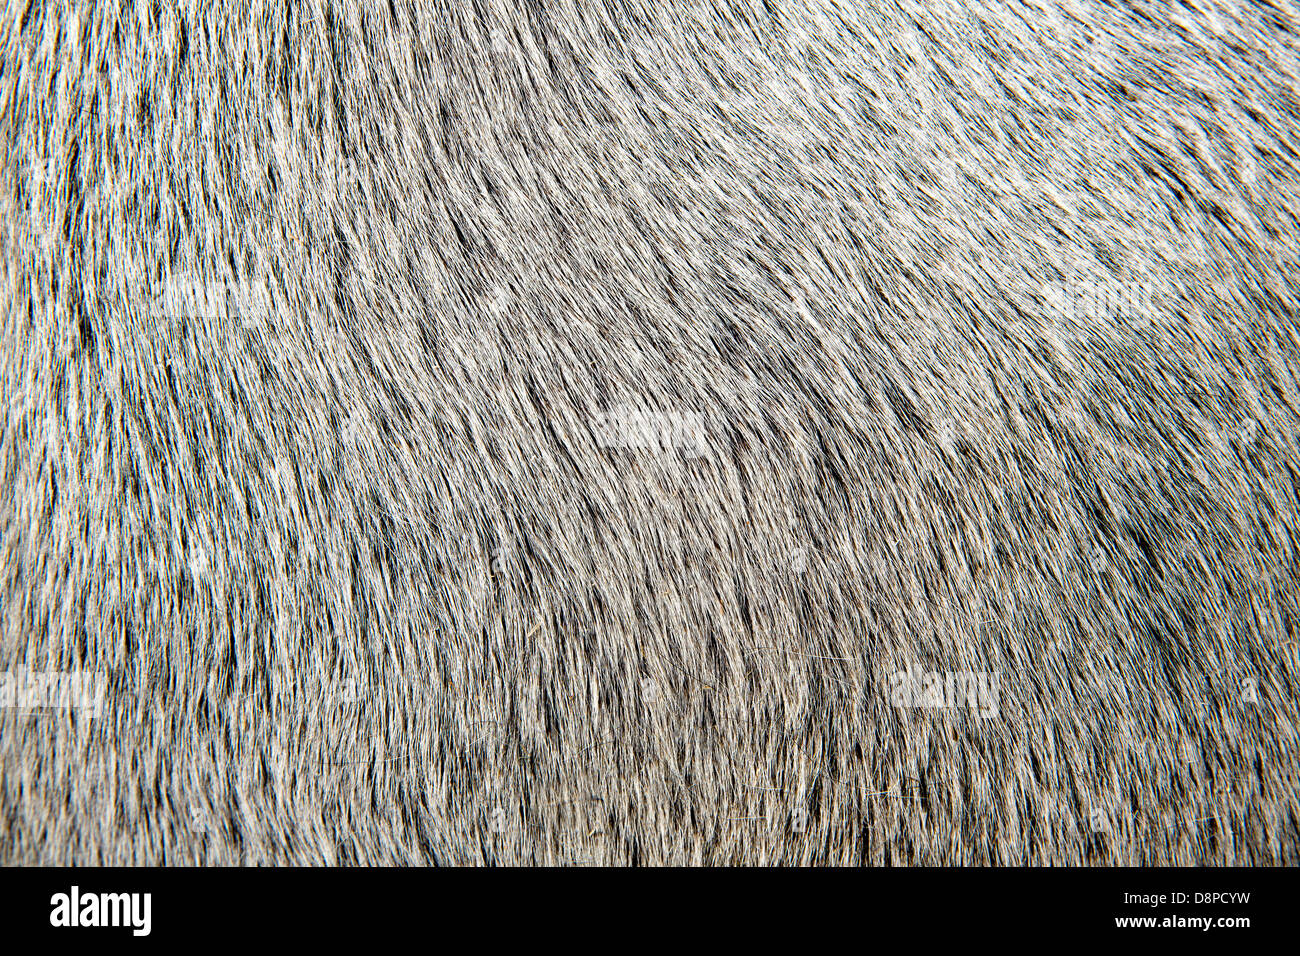 bull white hair closeup macro detail texture background Stock Photo